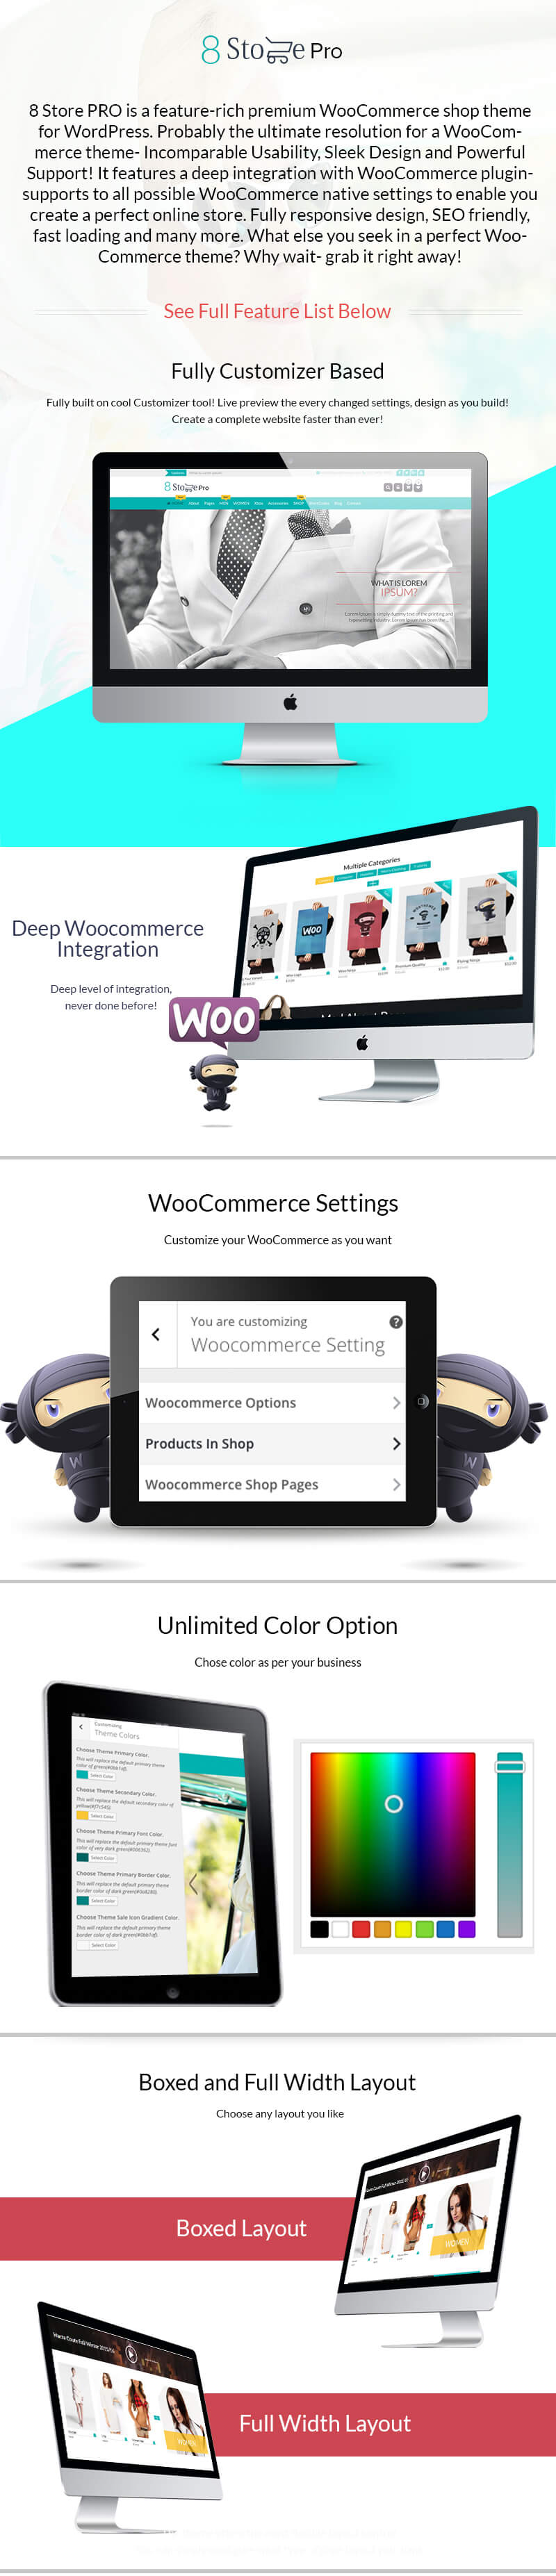 EightStore Pro – Best Premium WooCommerce, eCommerce and Store WordPress Theme